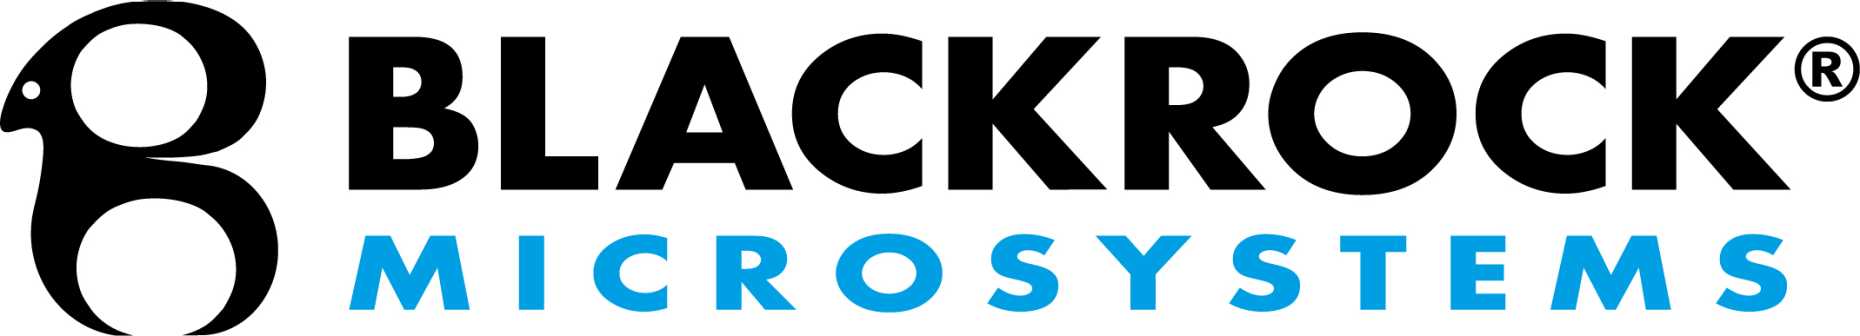 Blackrock Microsystems Logo